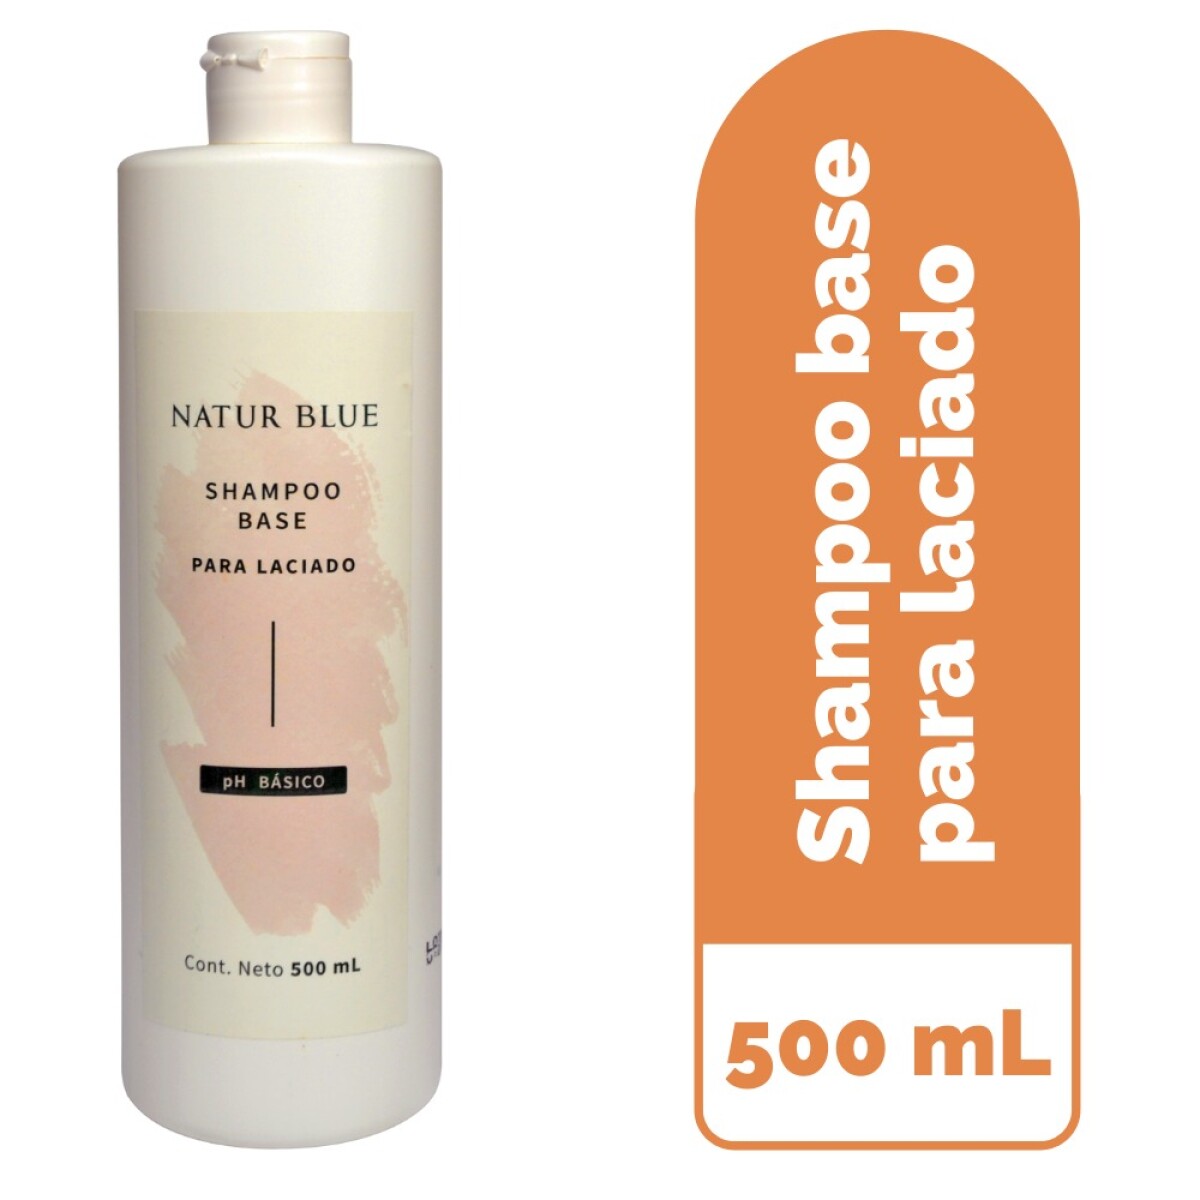 Shampoo Base para Laciado NATUR BLUE 500 mL 